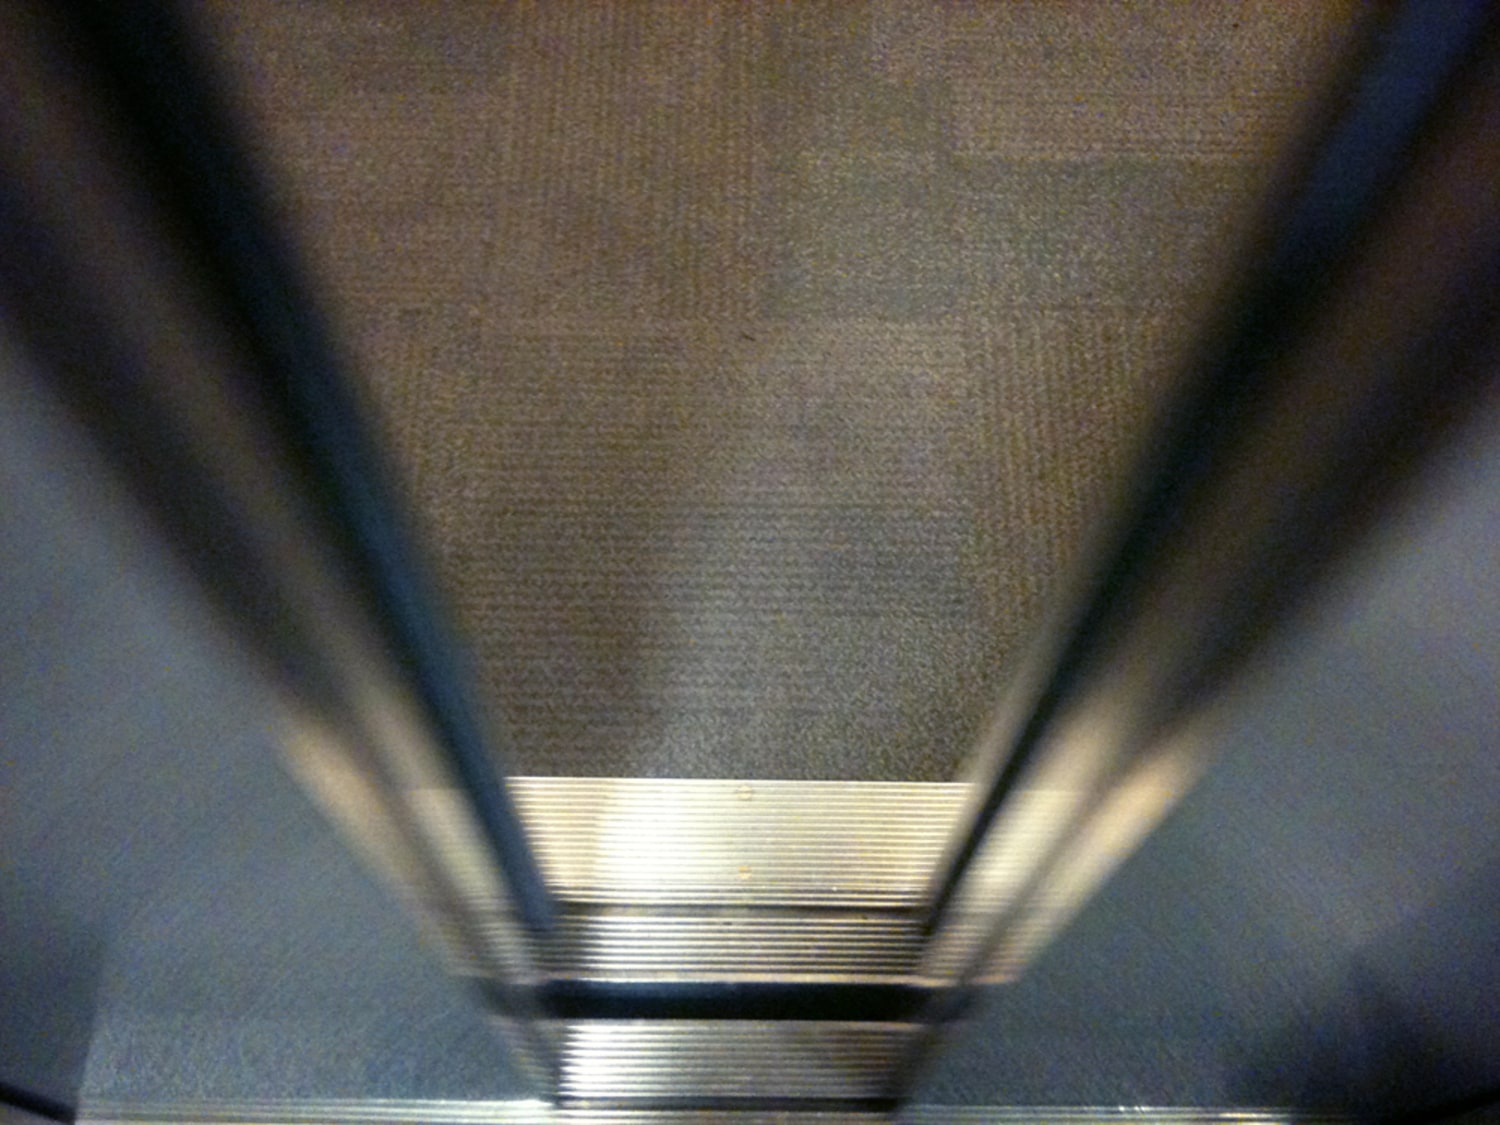 Fear Of Elevators